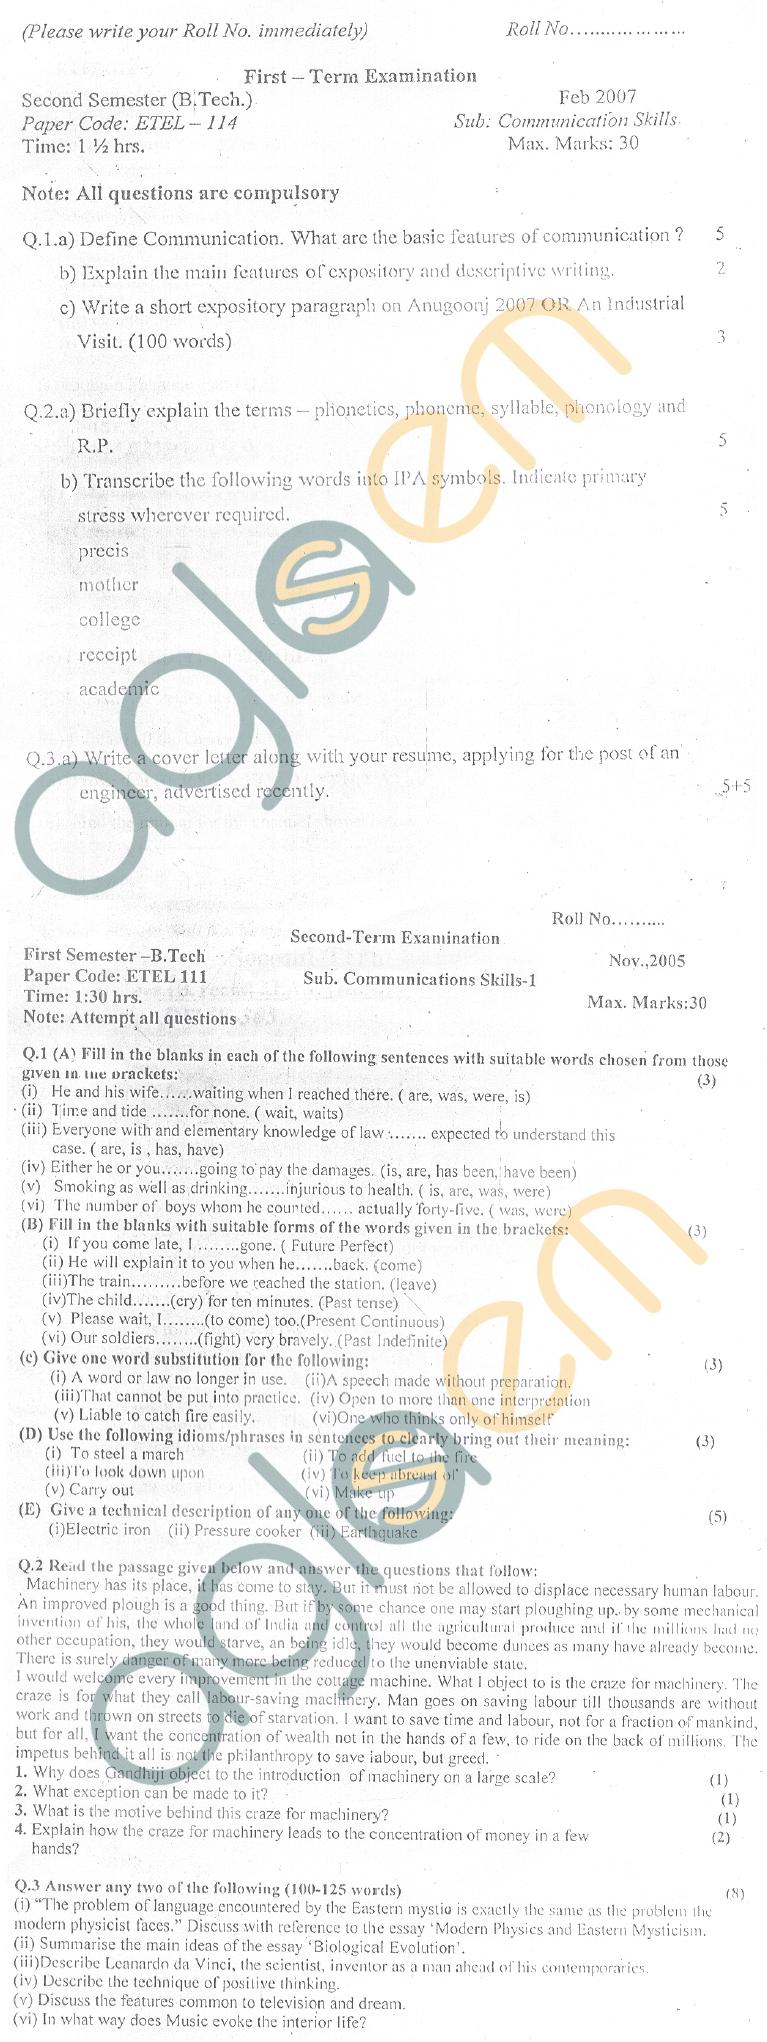 GGSIPU: Question Papers First Semester - First Term 2007 - ETEL-114